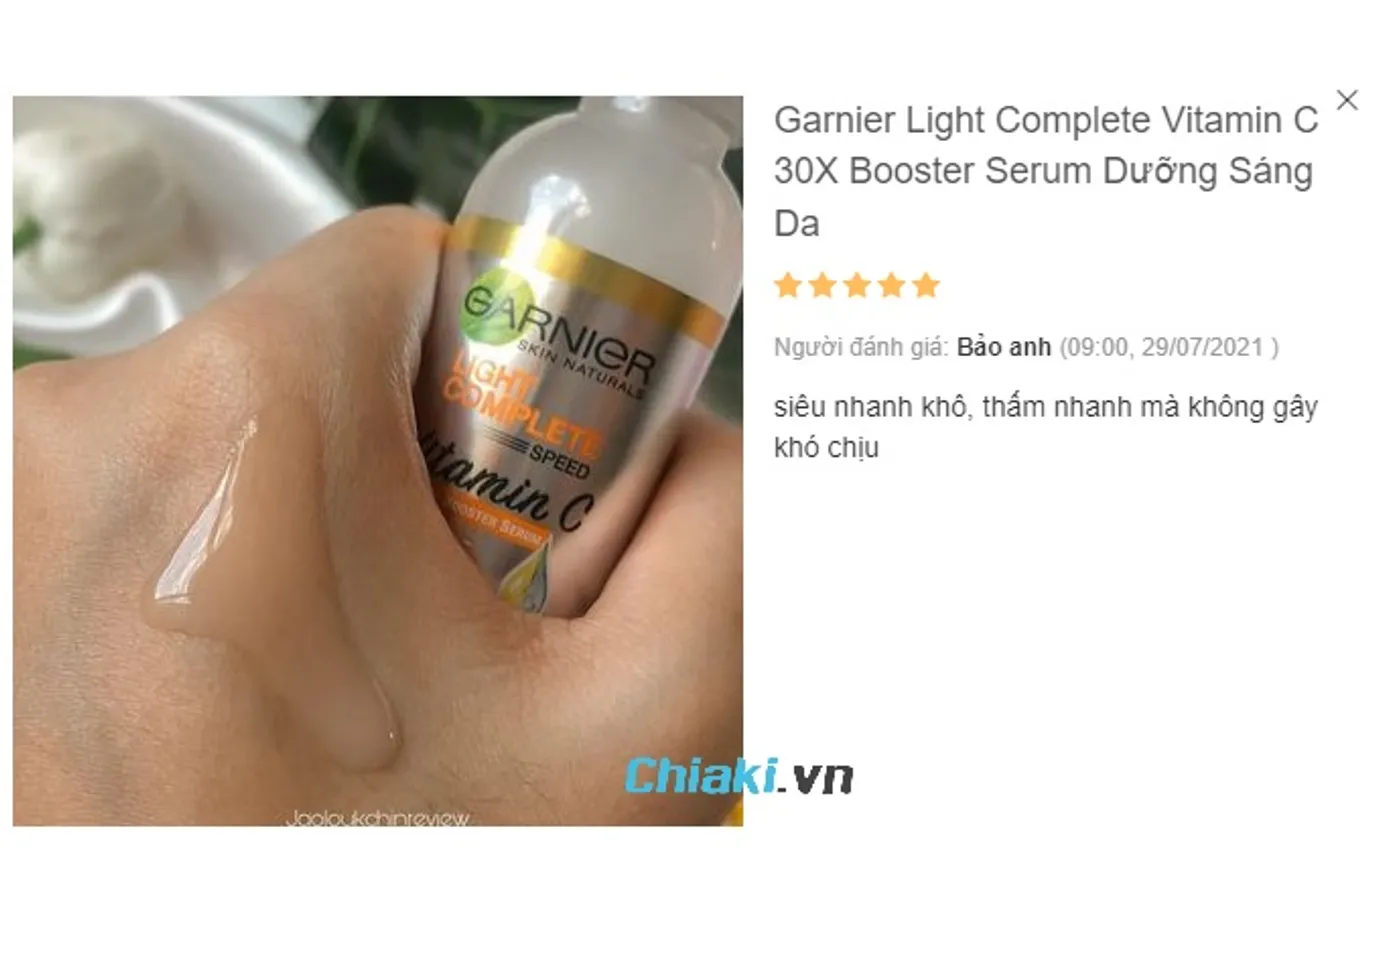 Review Garnier Light Complete Vitamin C 30X Booster Serum